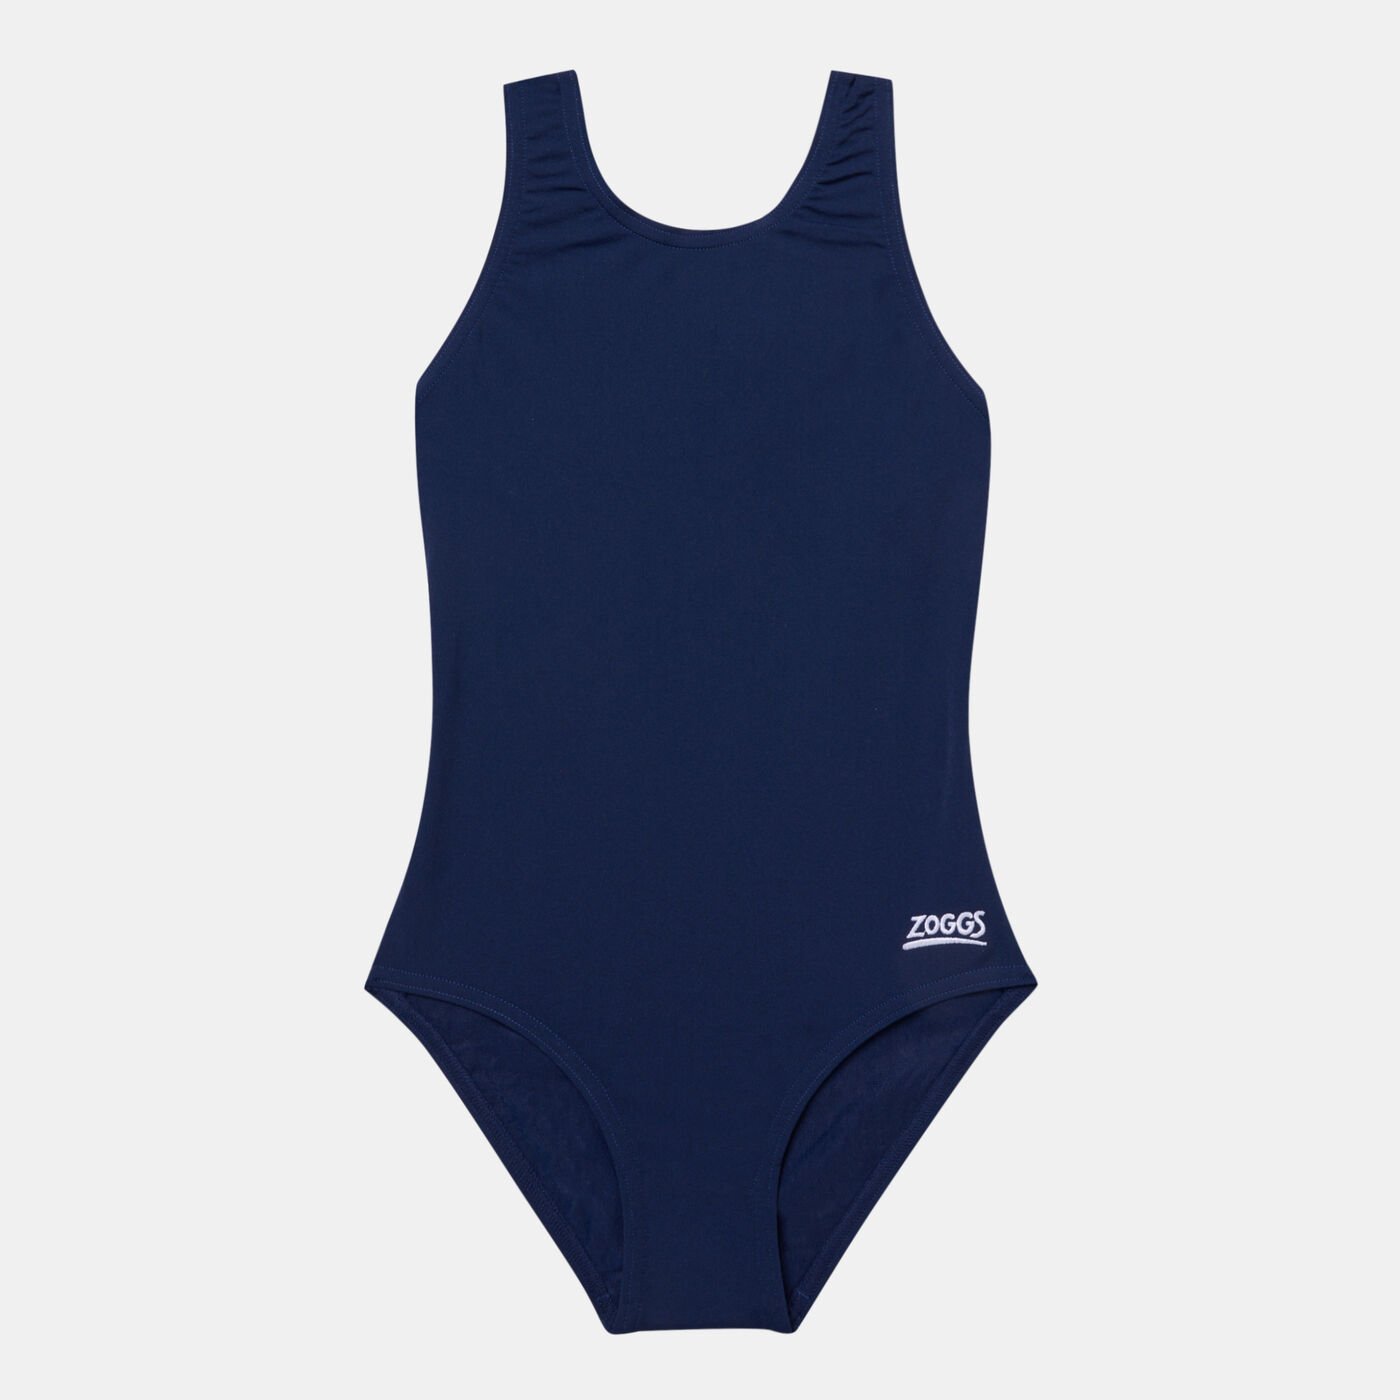 Kids' Cottesloe Sportsback Swimsuit